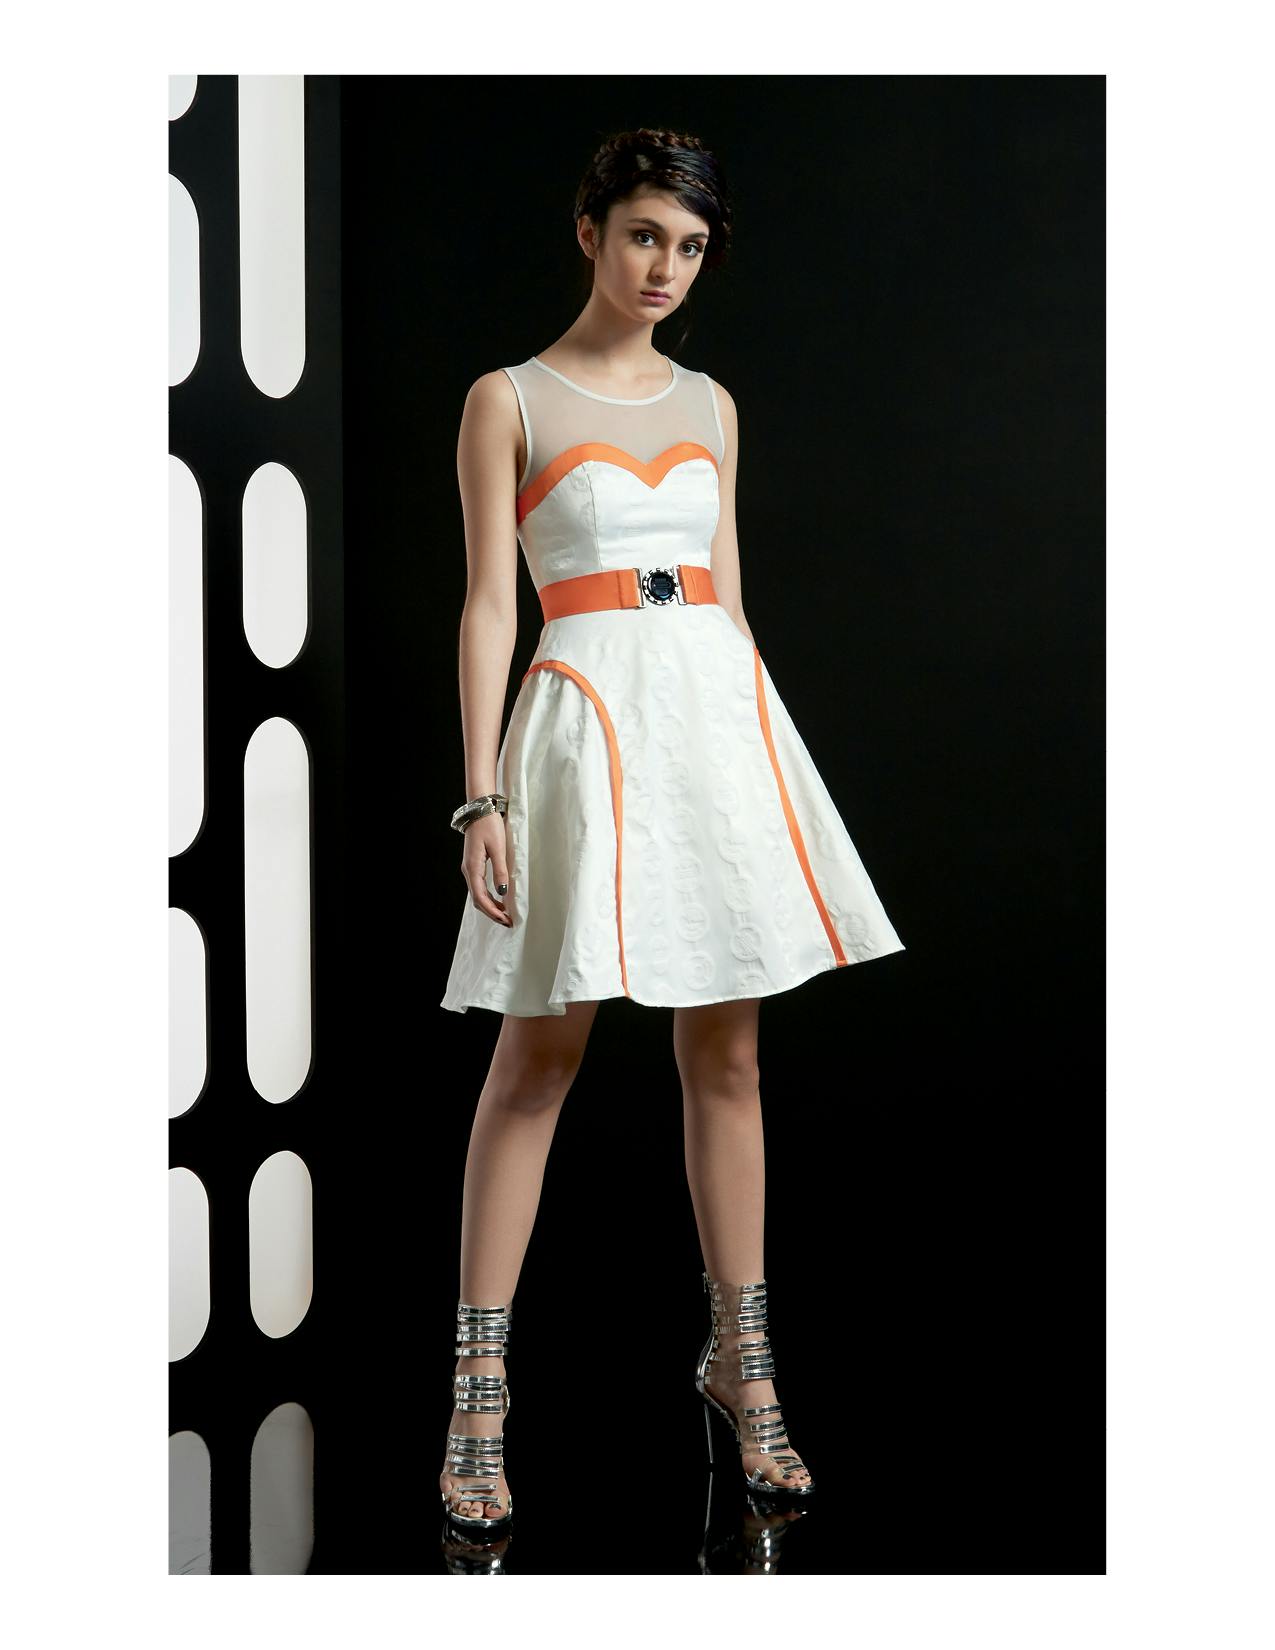 BB-8 Dress - $64.50